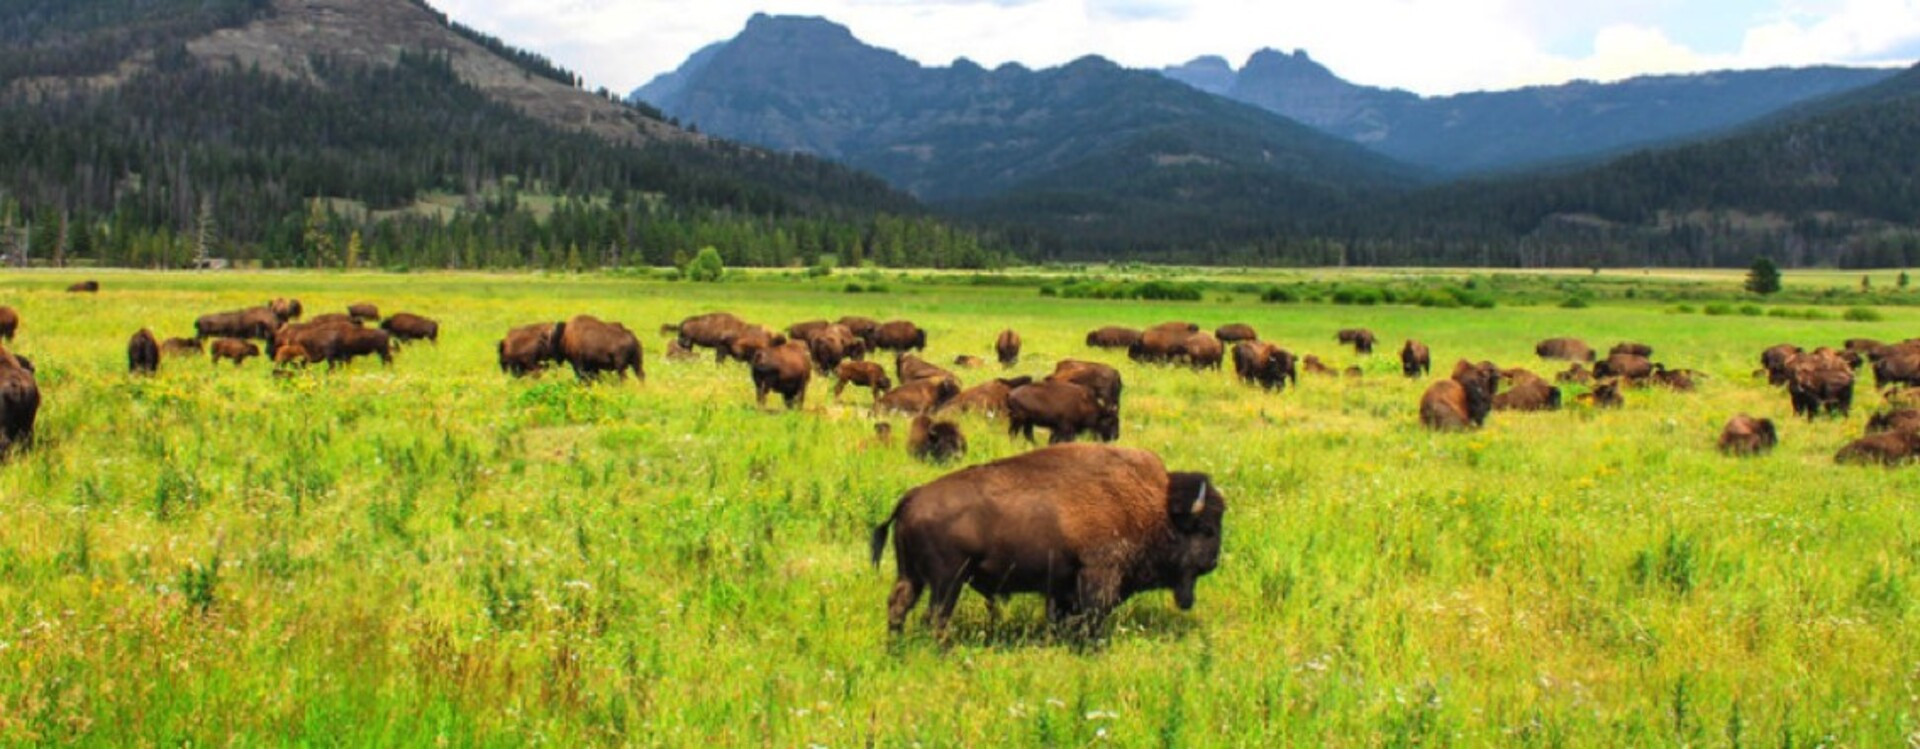 La storia del bisonte nordamericano